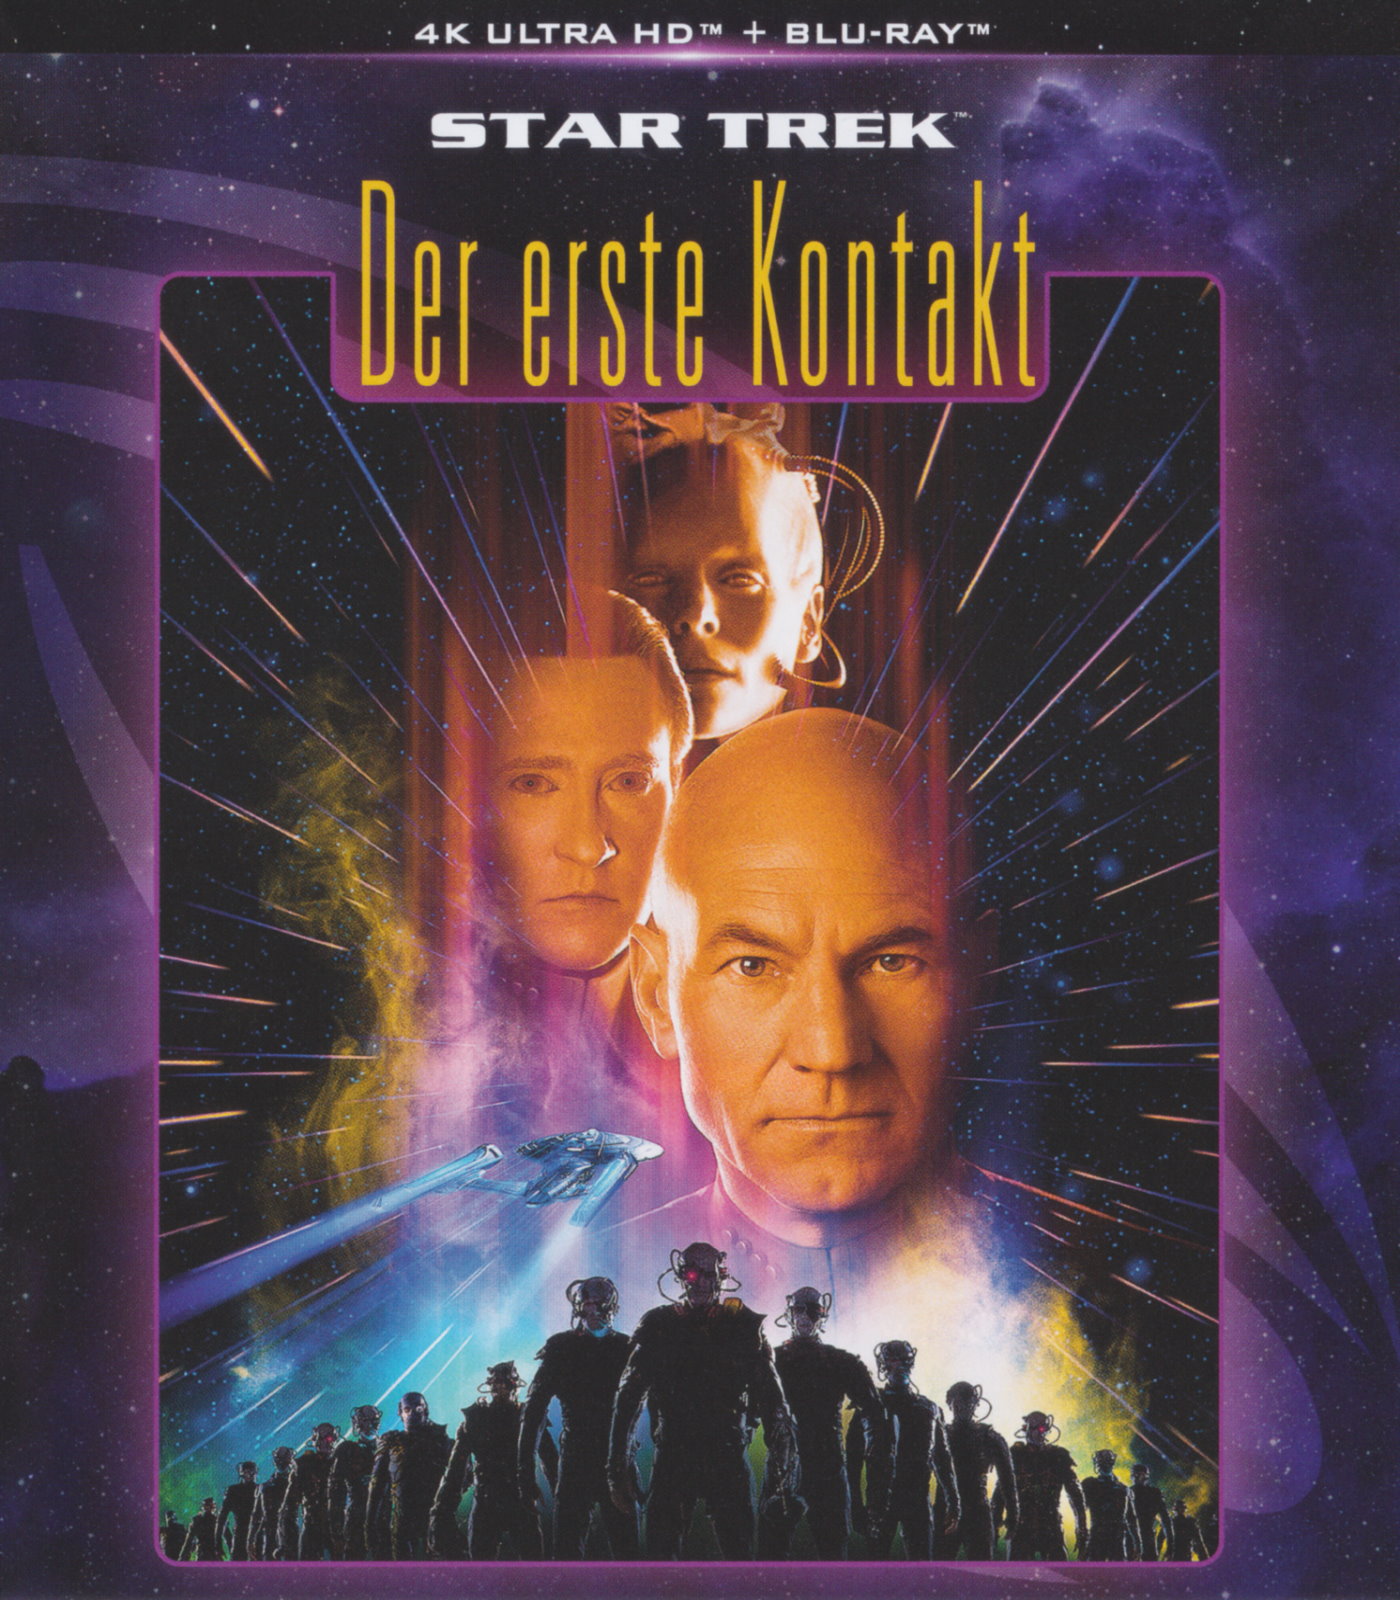 Cover - Star Trek - Der erste Kontakt.jpg